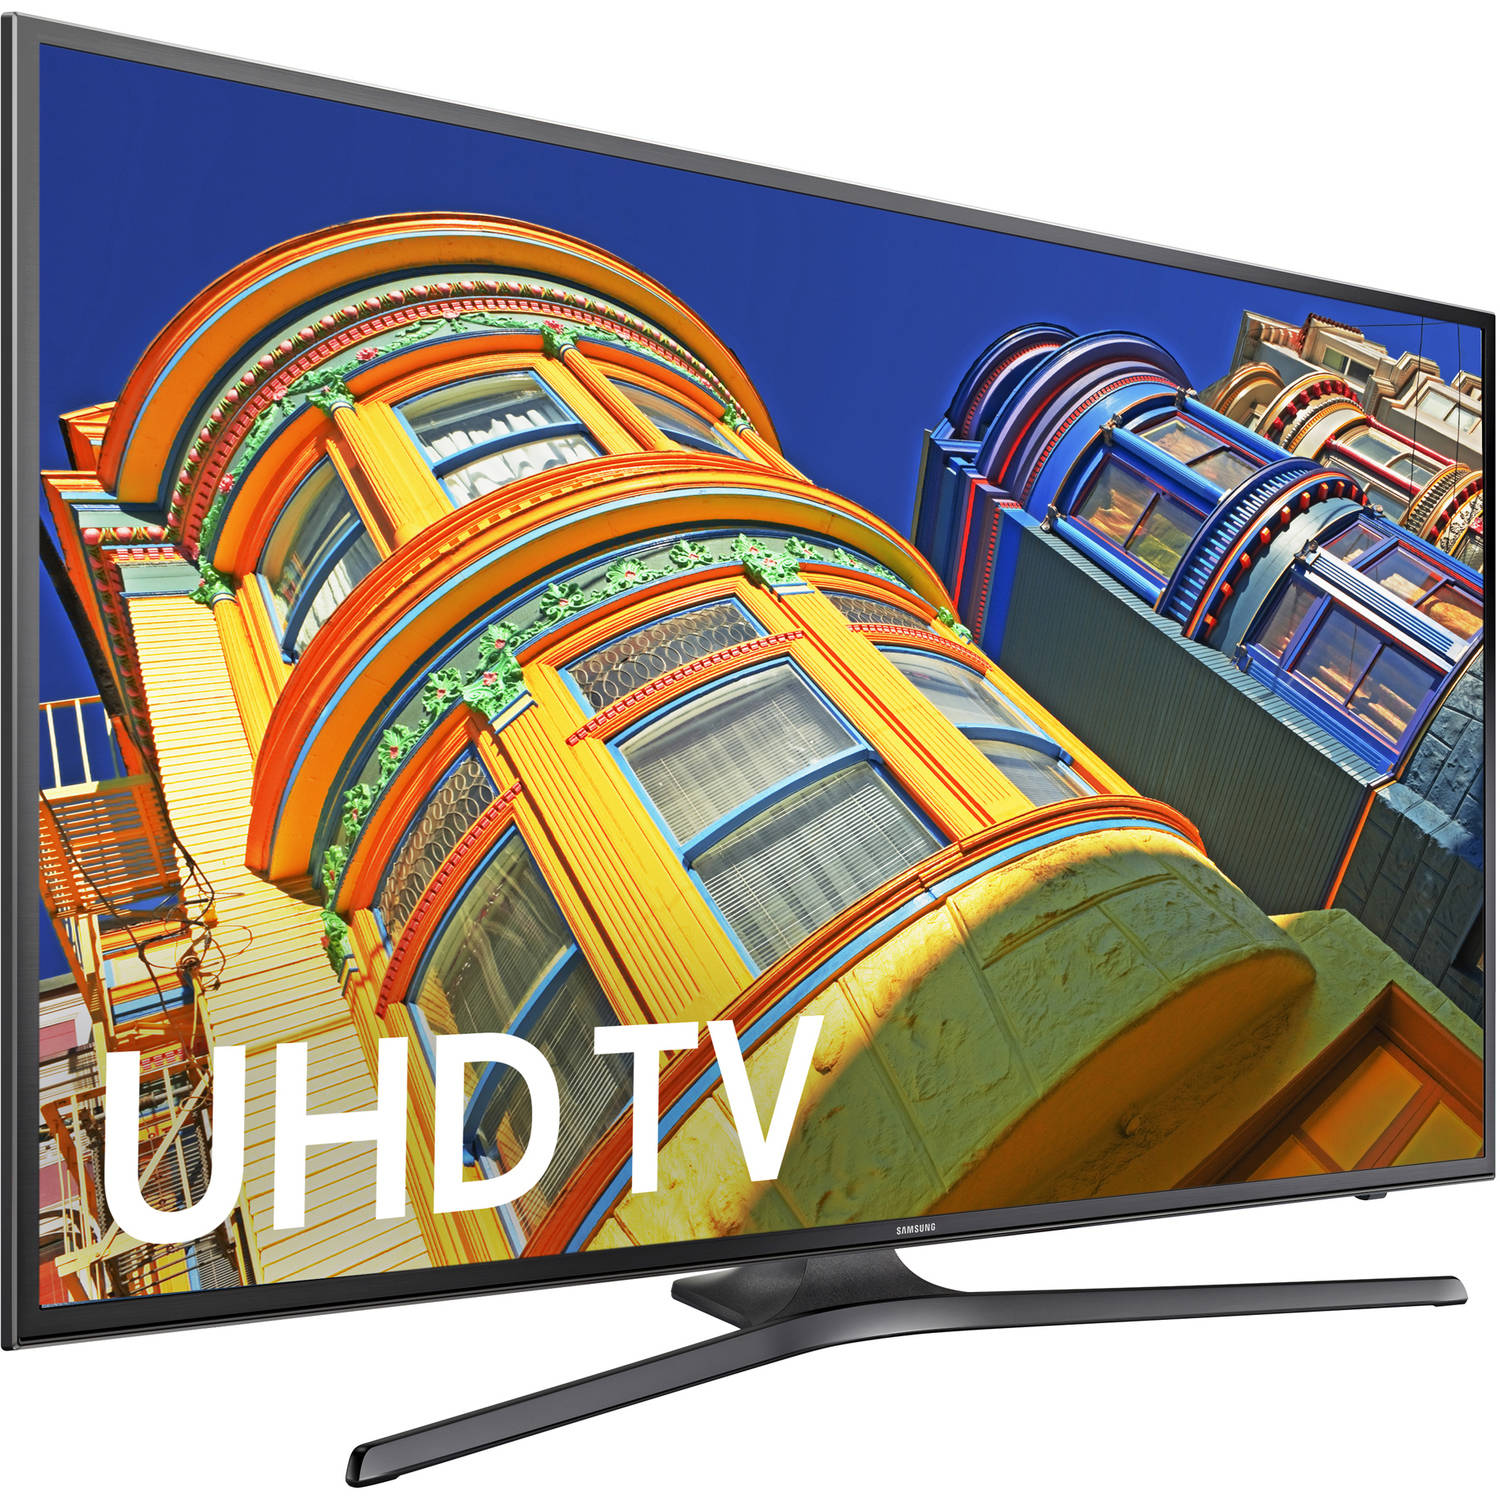 Samsung UN60KU6300F - 60" Diagonal Class 6 Series LED-backlit LCD TV - Smart TV - 4K UHD (2160p) 3840 x 2160 - HDR - direct-lit LED - dark titan - image 2 of 6